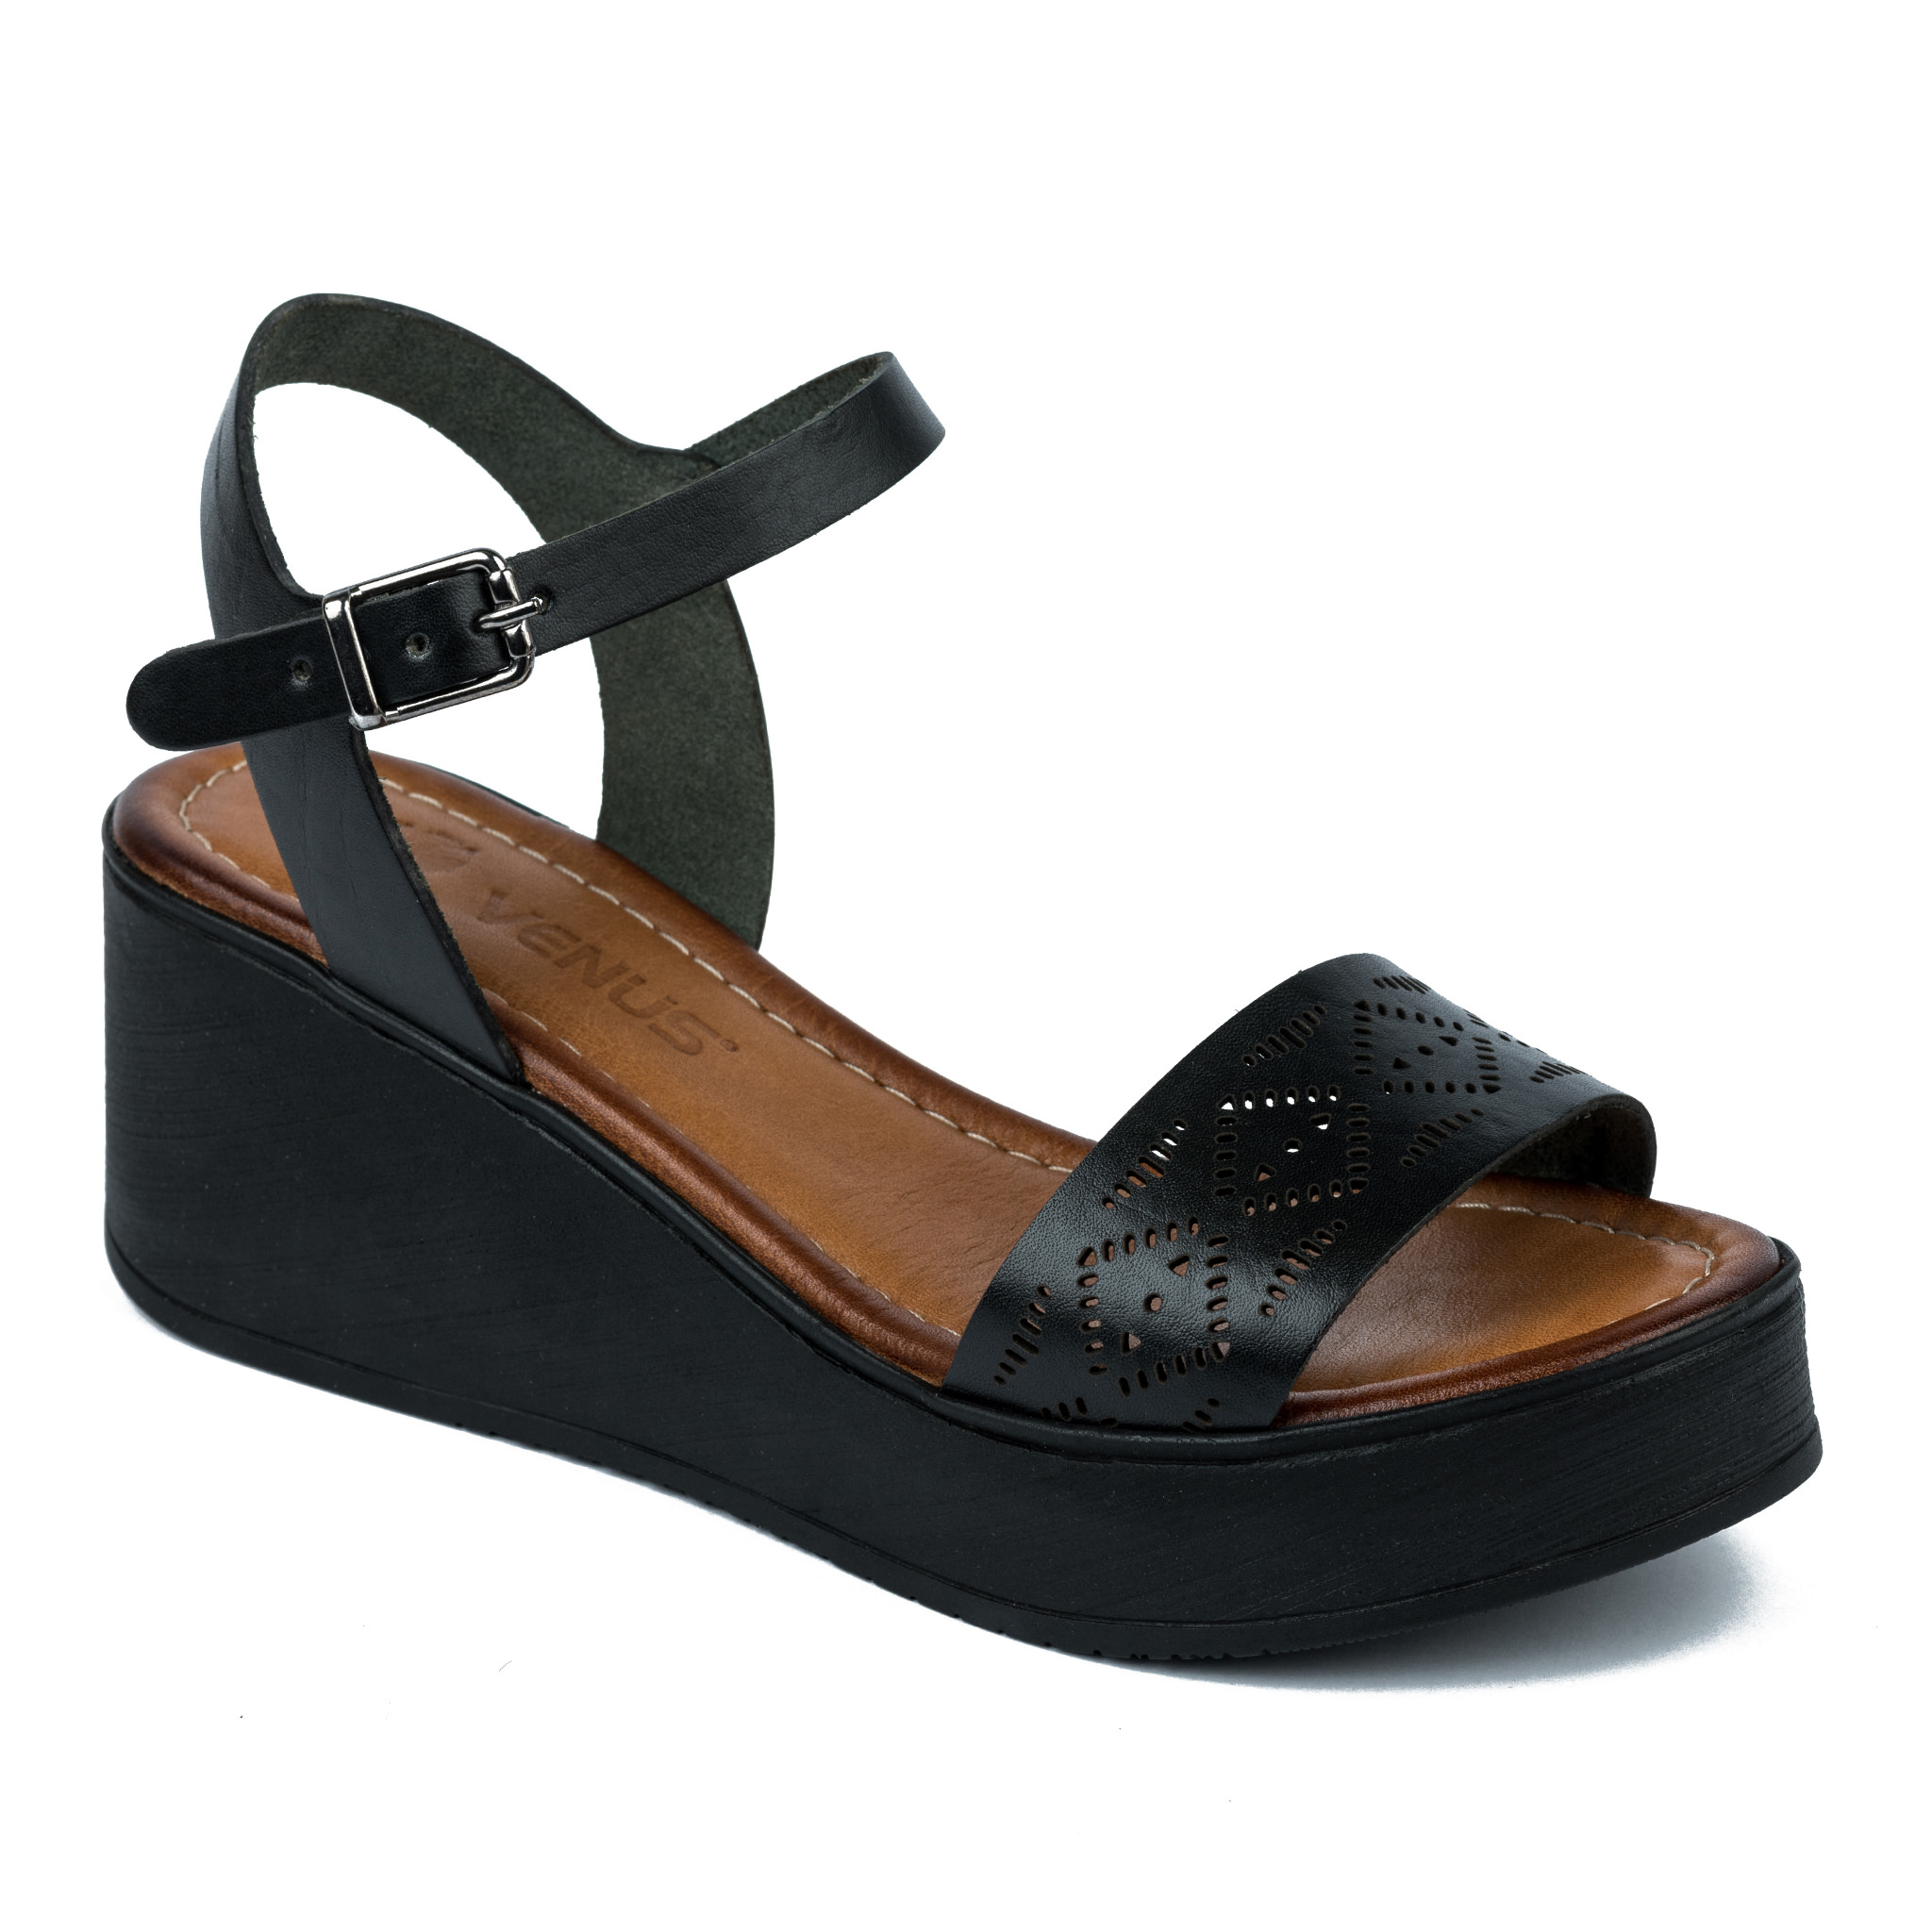 Women sandals A257 - BLACK